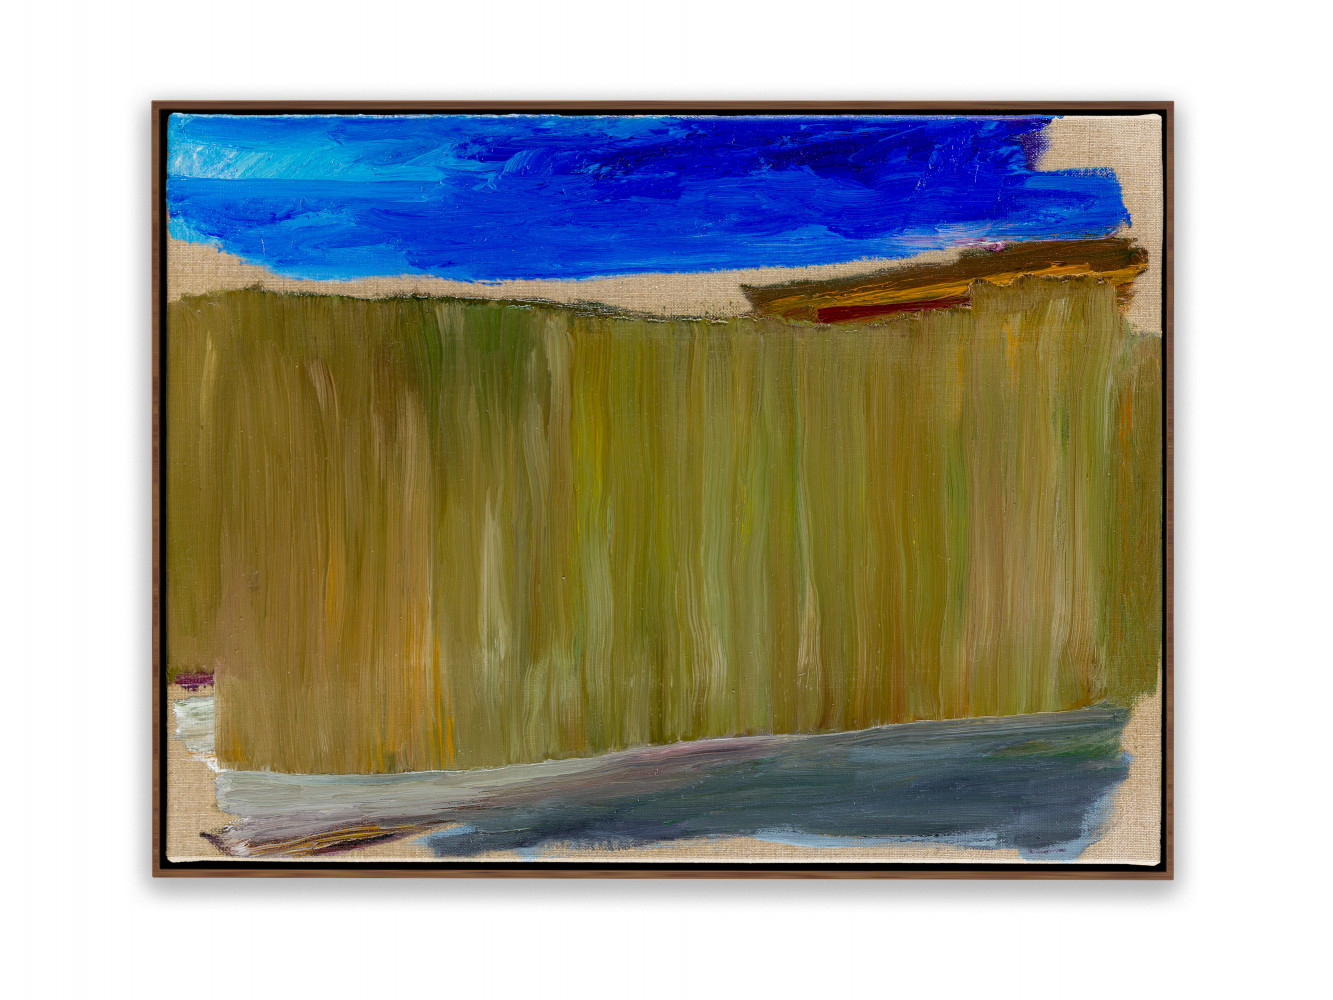 Pedro Cabrita Reis, ‘Landscapes (series XI) #5’, 2020, Oil on raw canvas